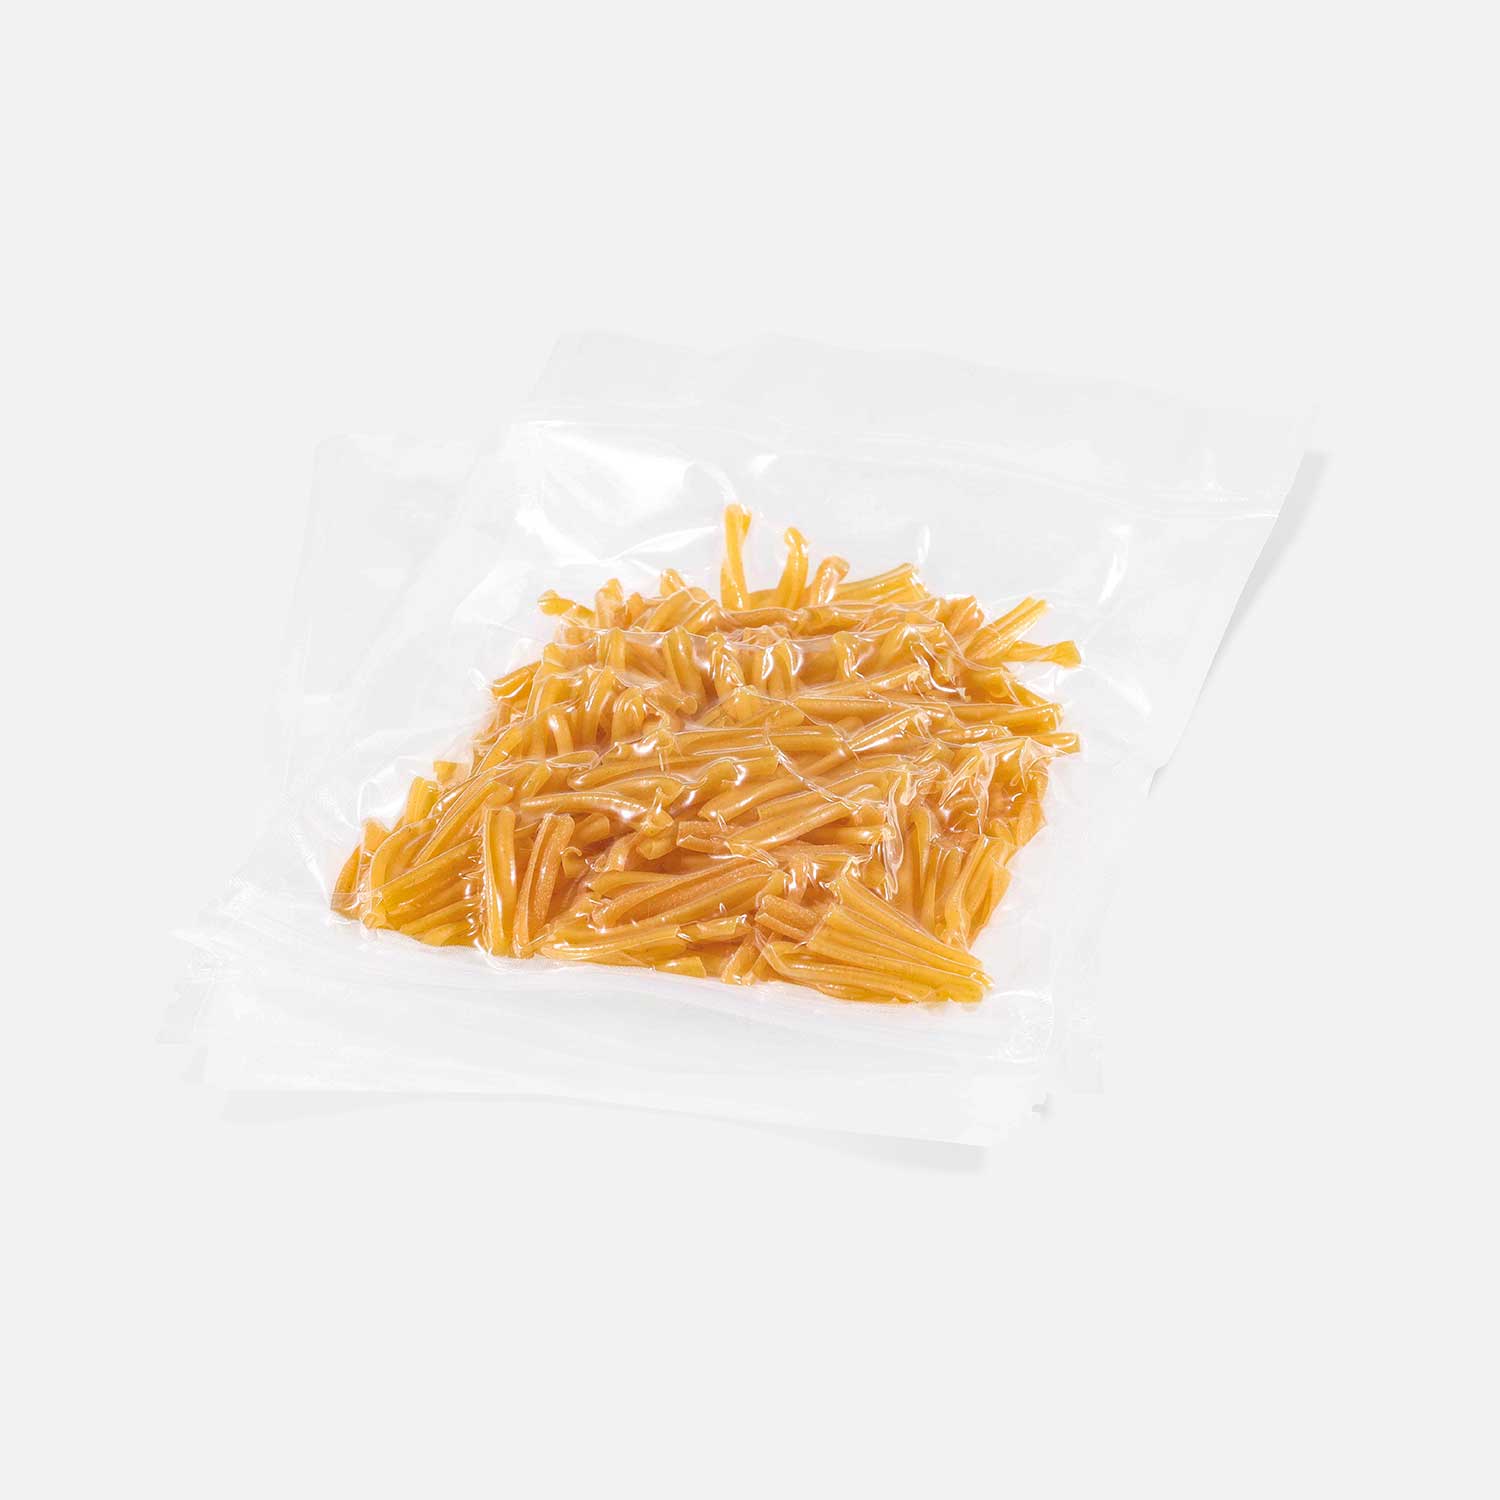 Structured transparent vacuum bag with zip closure, vacuum-sealed with noodles